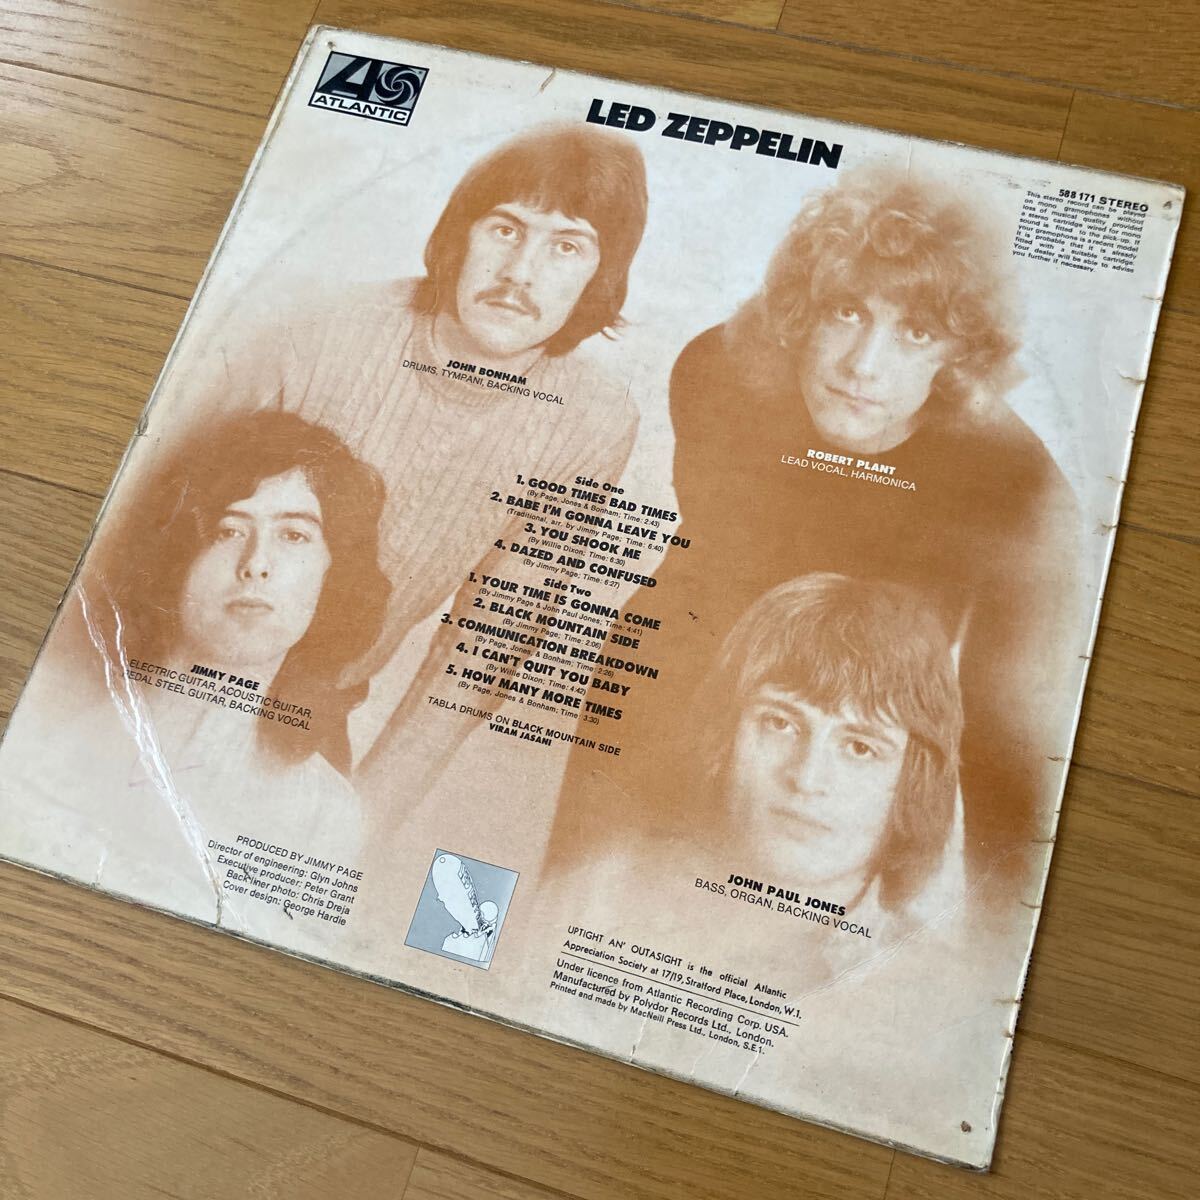 Led Zeppelin　1st　英国オリジナルステレオ盤　A1/B1　レッドツェッペリン